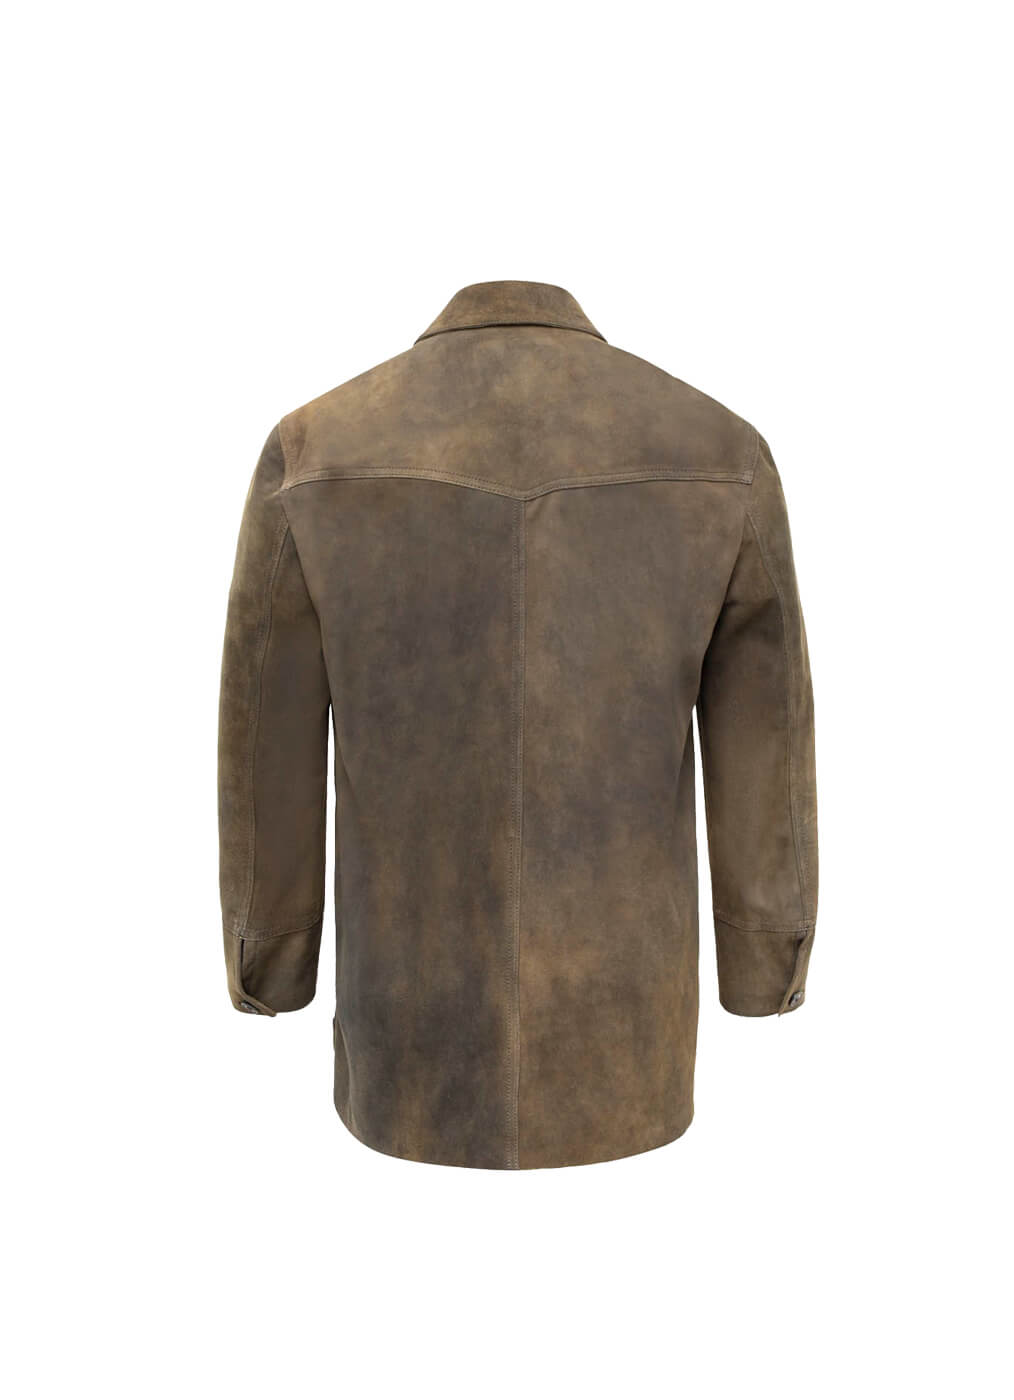 Goat Leather Shirt Men “Sam”, kabok